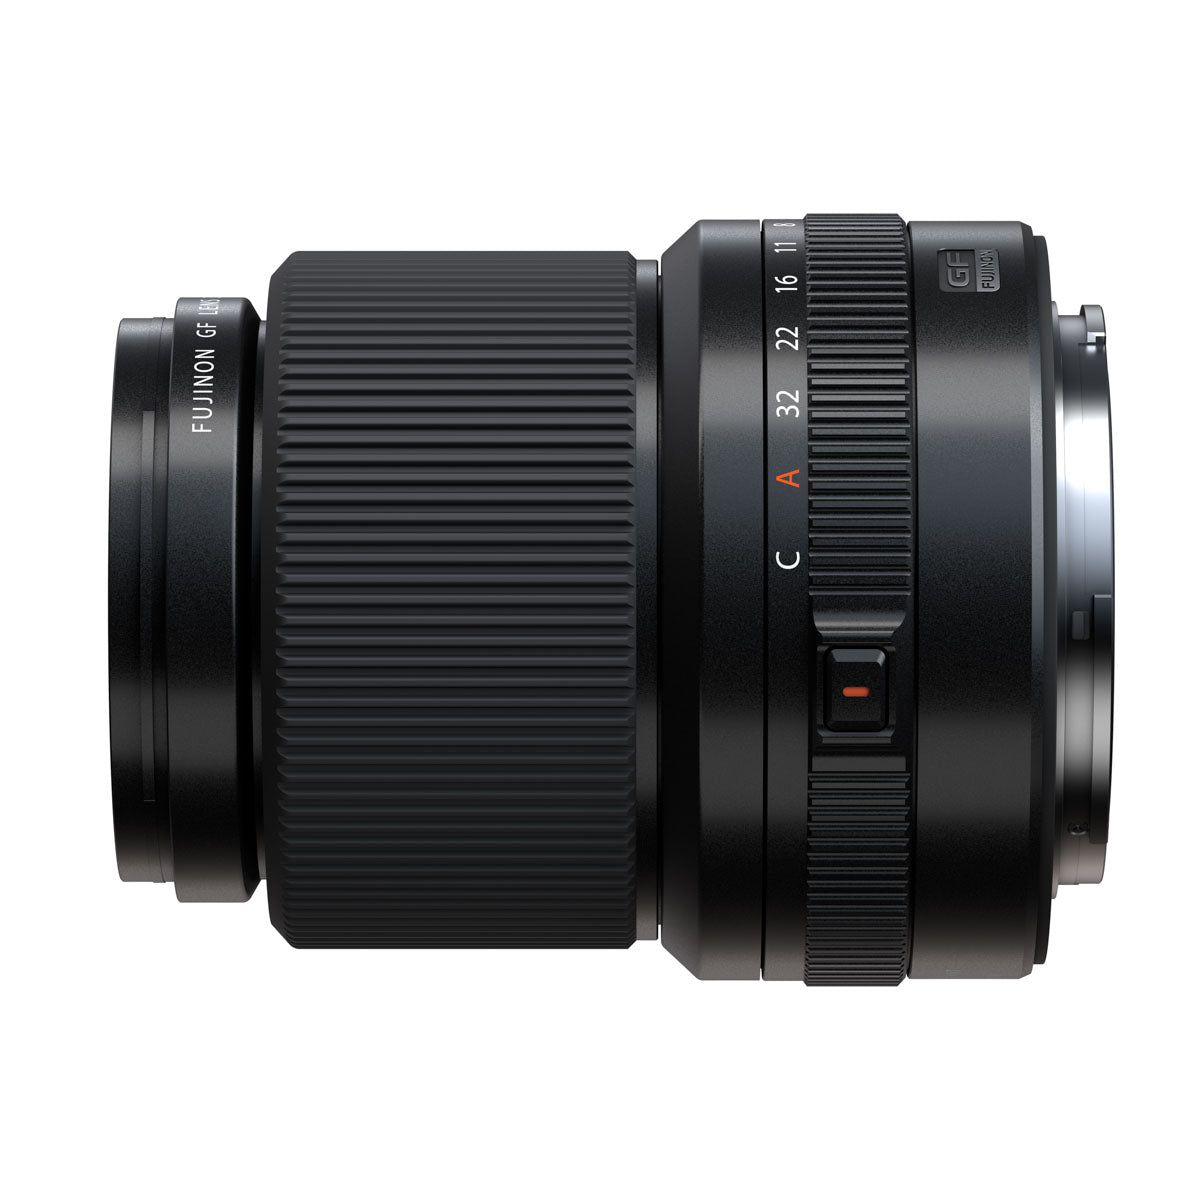 Fujifilm GF 30mm f5.6 T/S Tilt Shift Lens